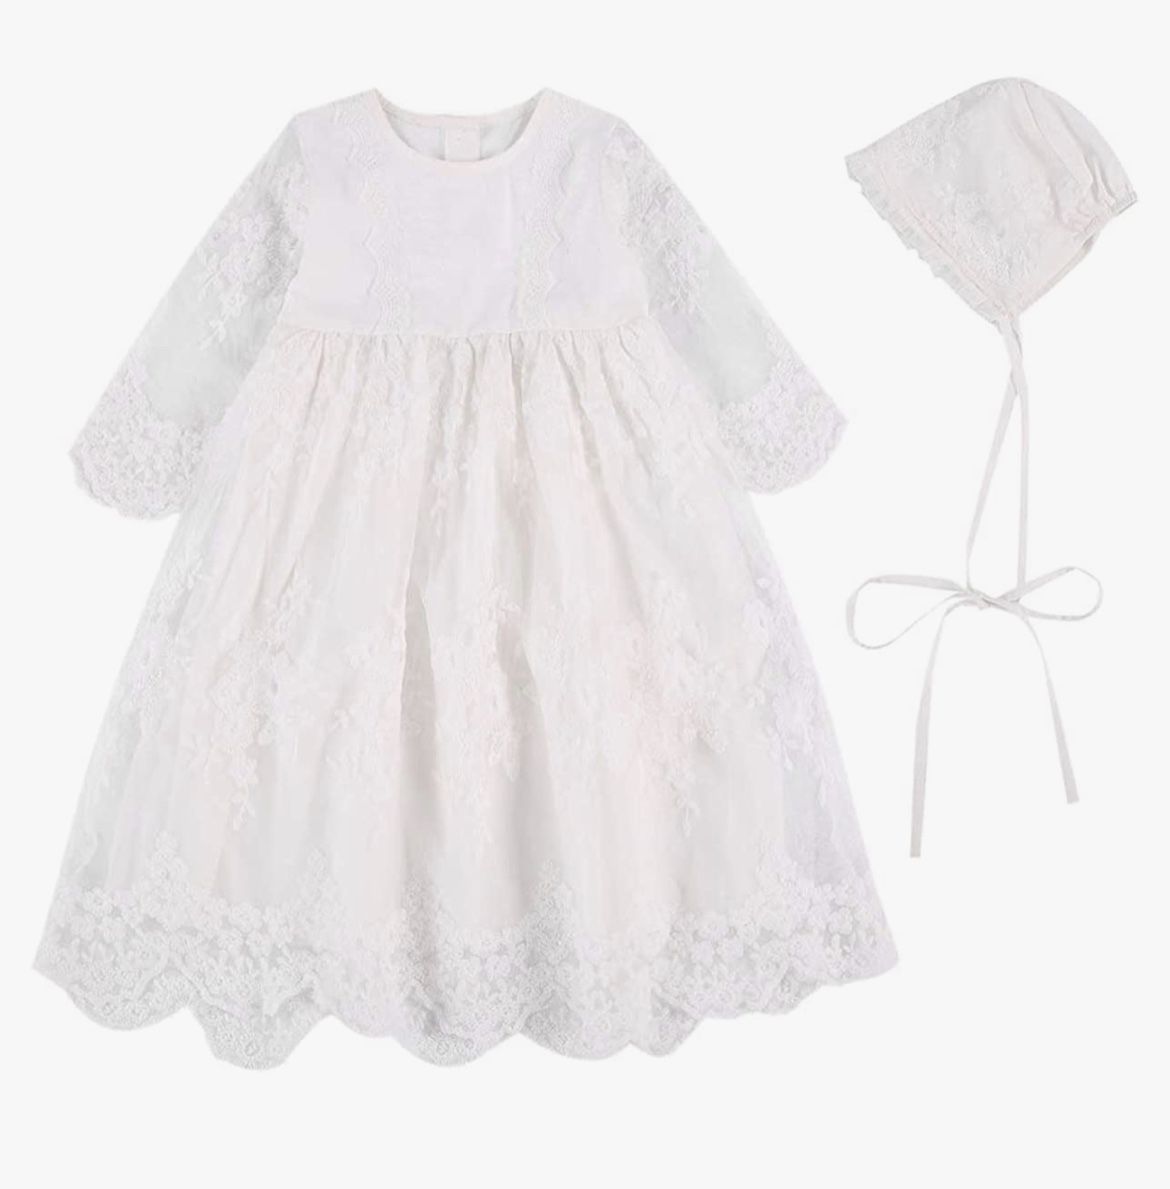 Baby Girl Christening Gown Long Sleeve White Lace Baptism Dress Flower Girl